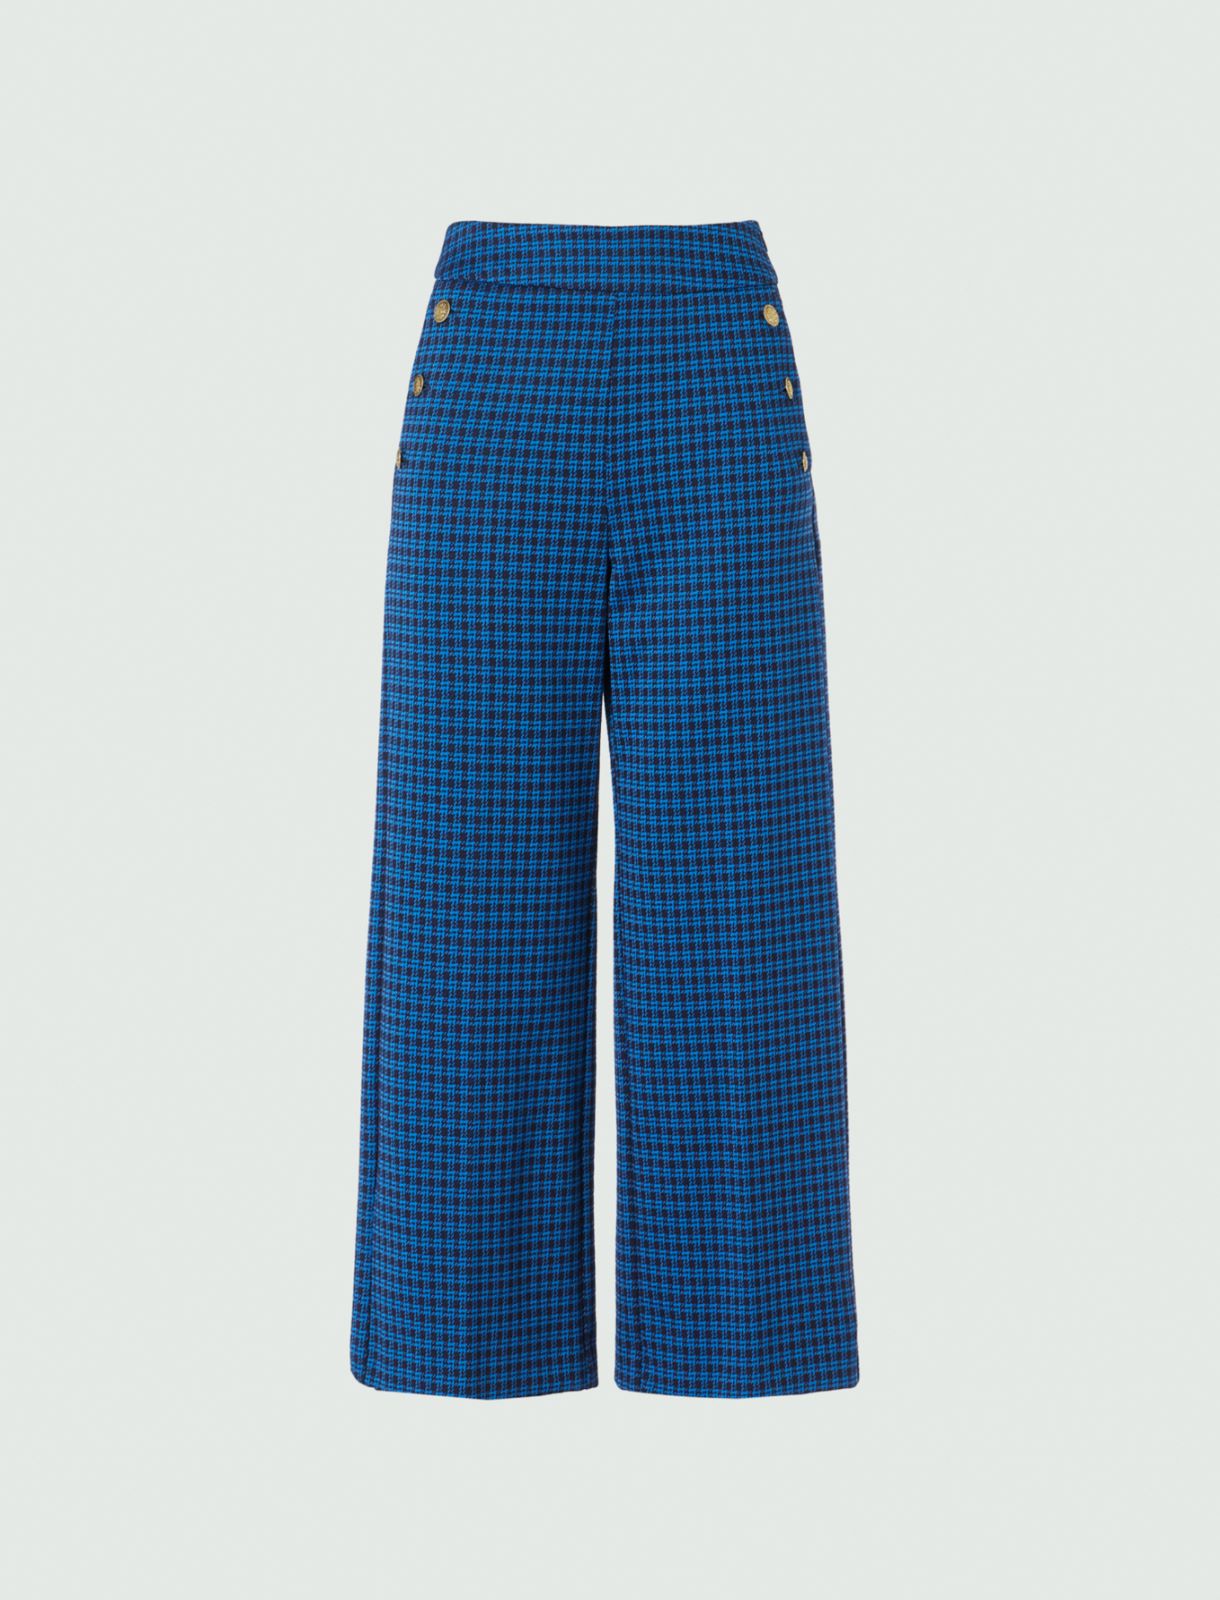 Pantalon en jersey - Bleuet - Marella - 5